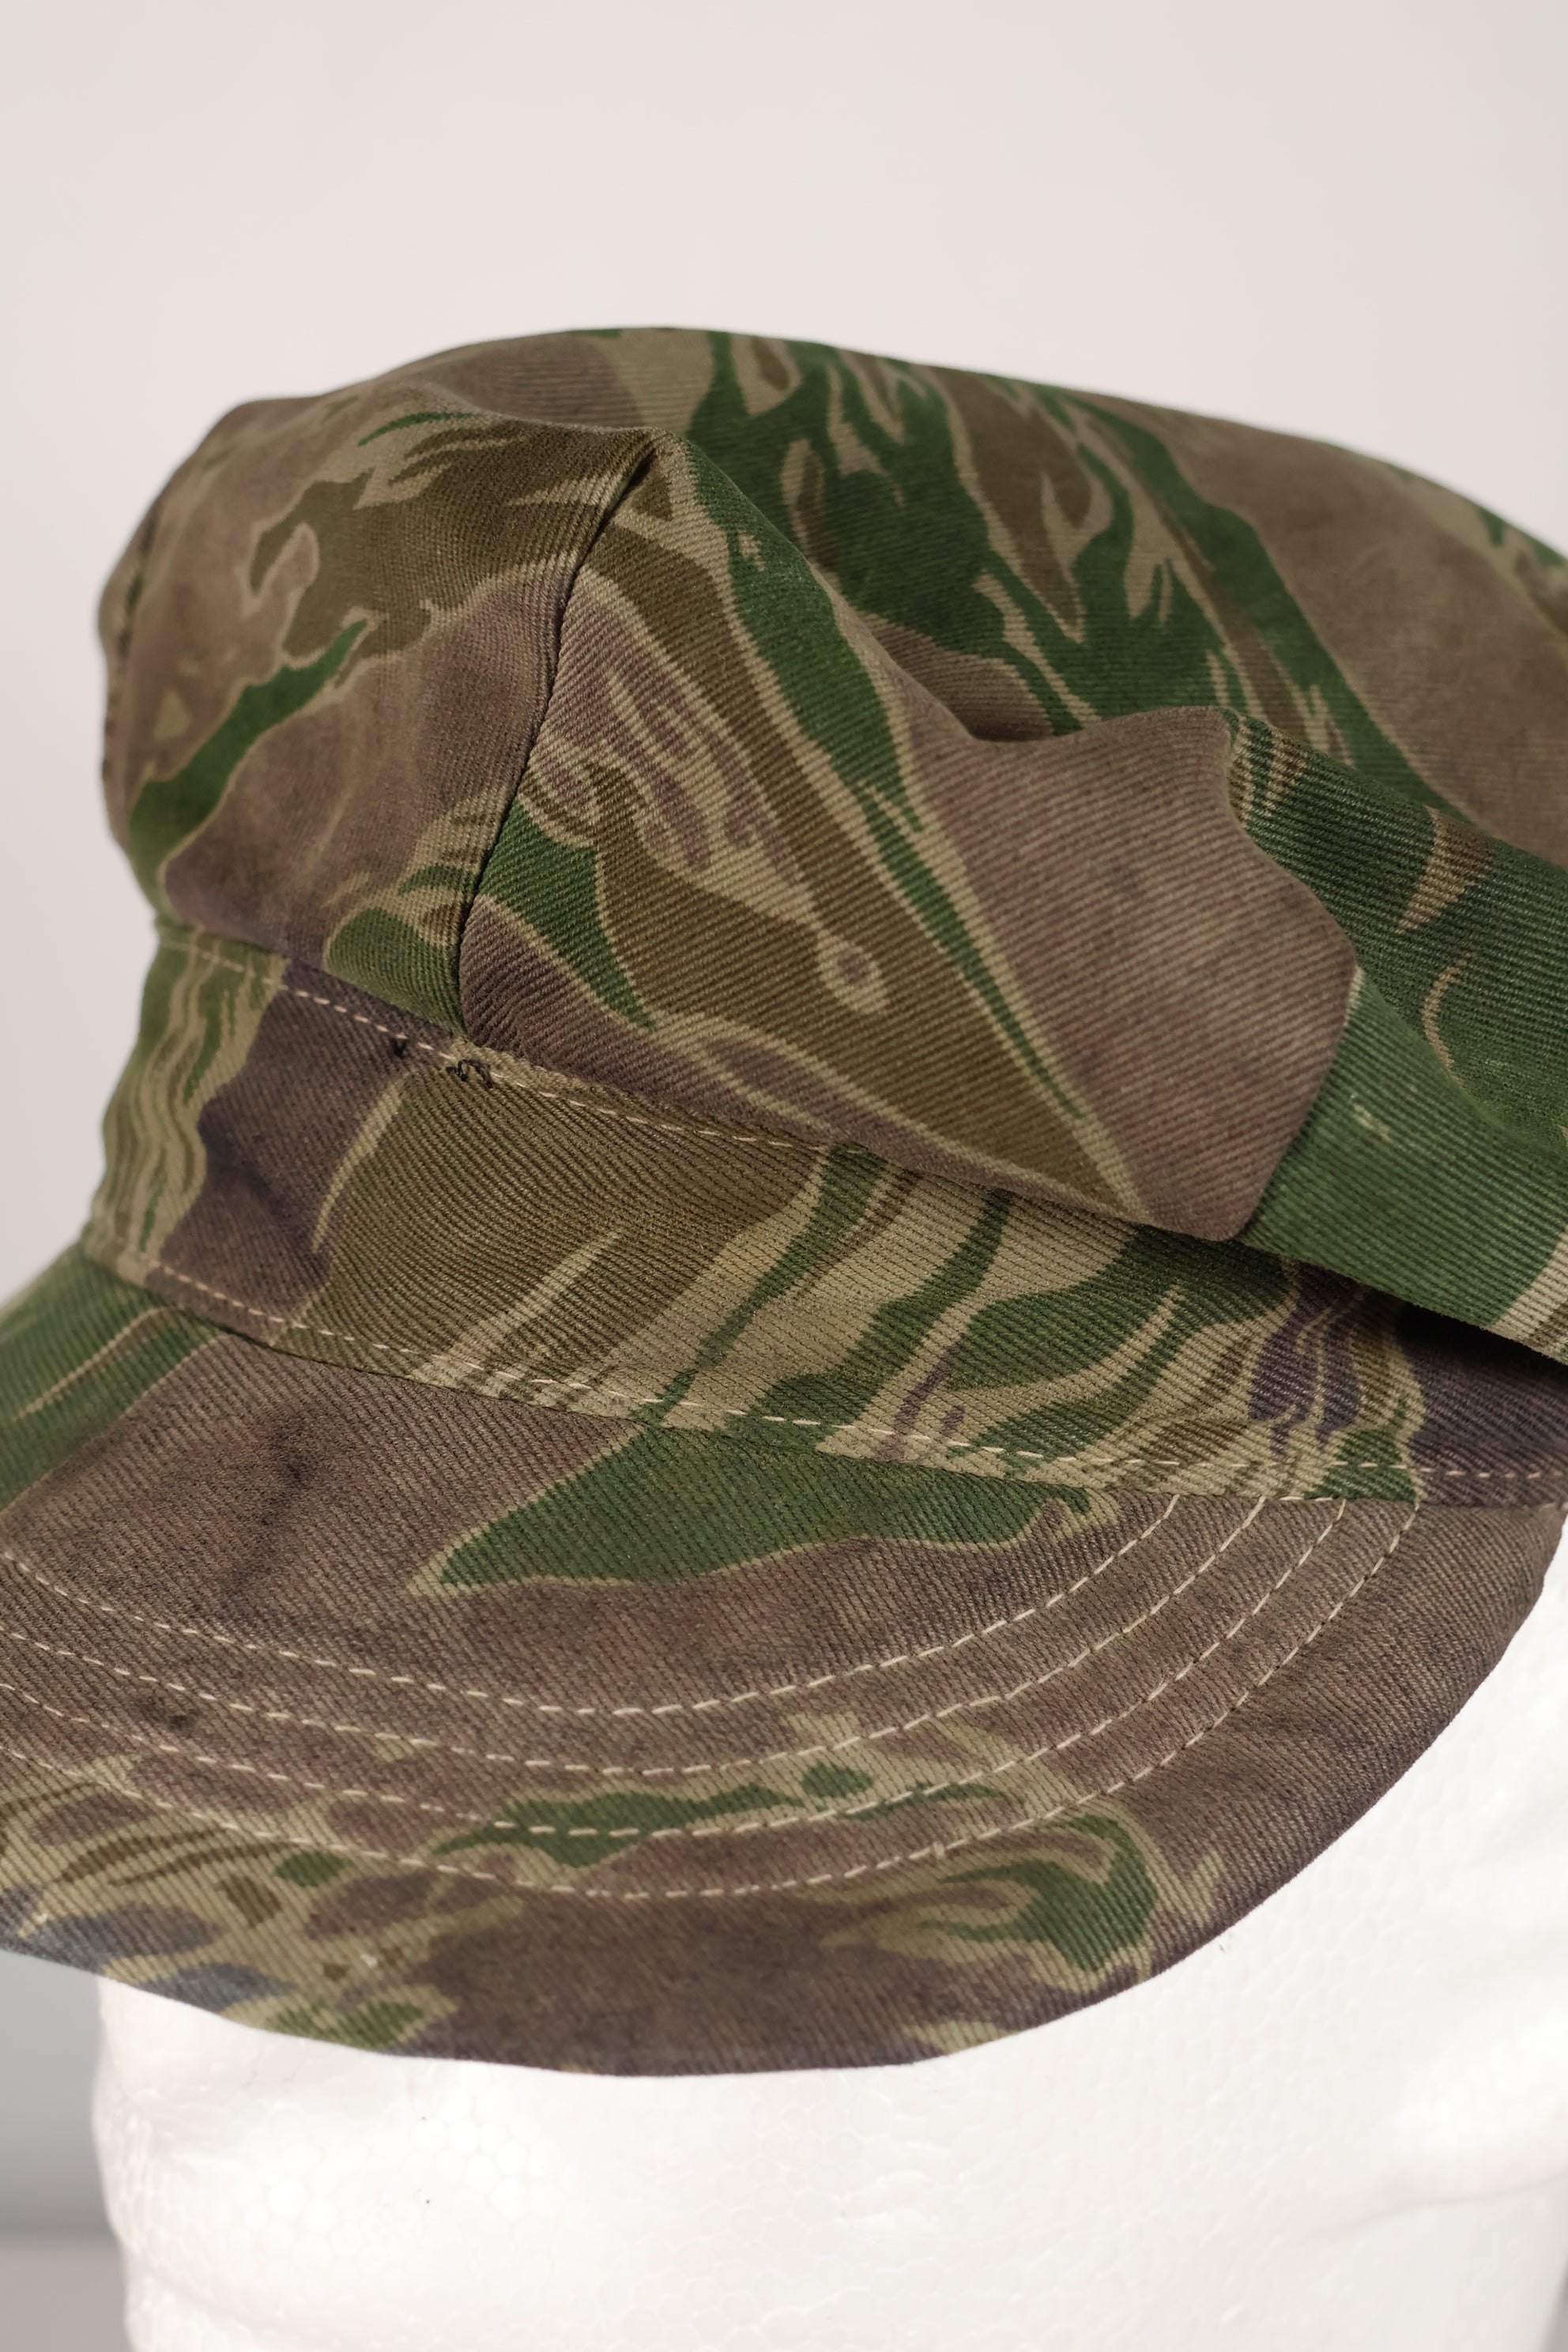 Real Okinawa Tiger Pattern CIDG Hat Tiger Stripe Hat, faded, used.